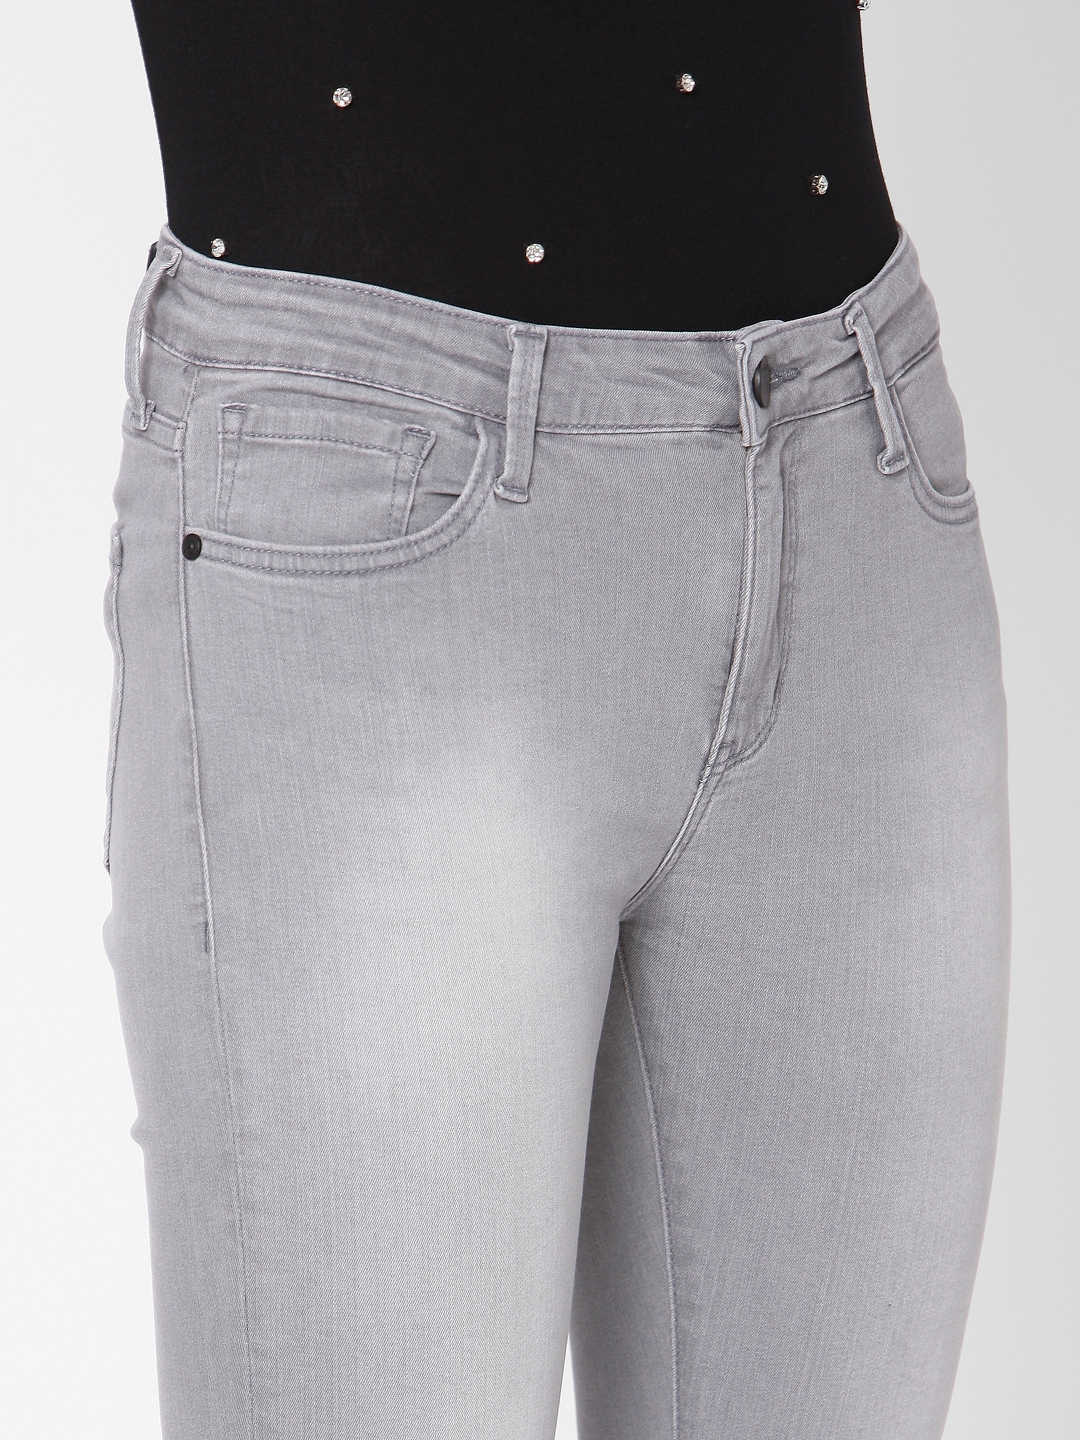 spykar | Women's Grey Cotton Solid Skinny Jeans 5